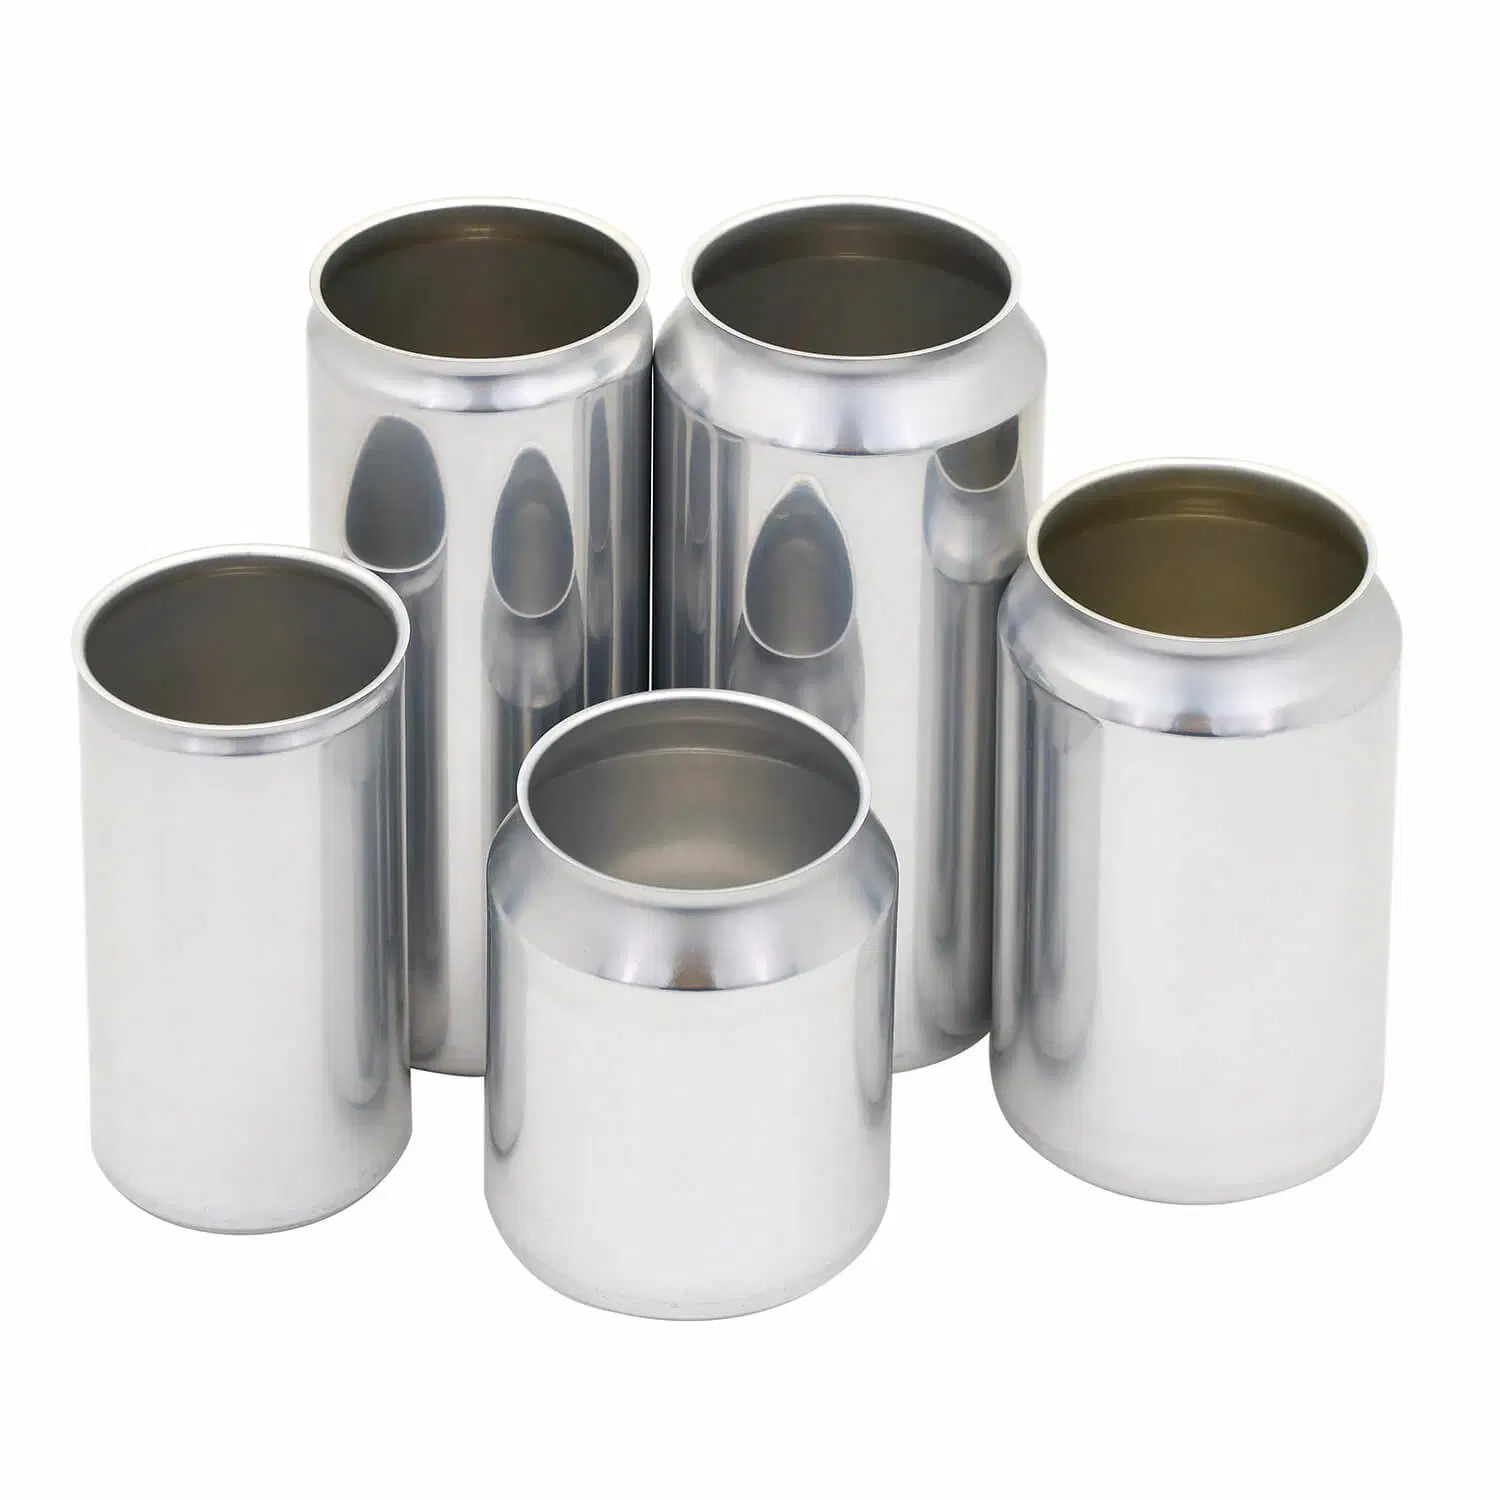 Standard 12oz 355ml/16oz 473ml/330 ml/500ml/250ml Slim l'aluminium peut pour les boissons